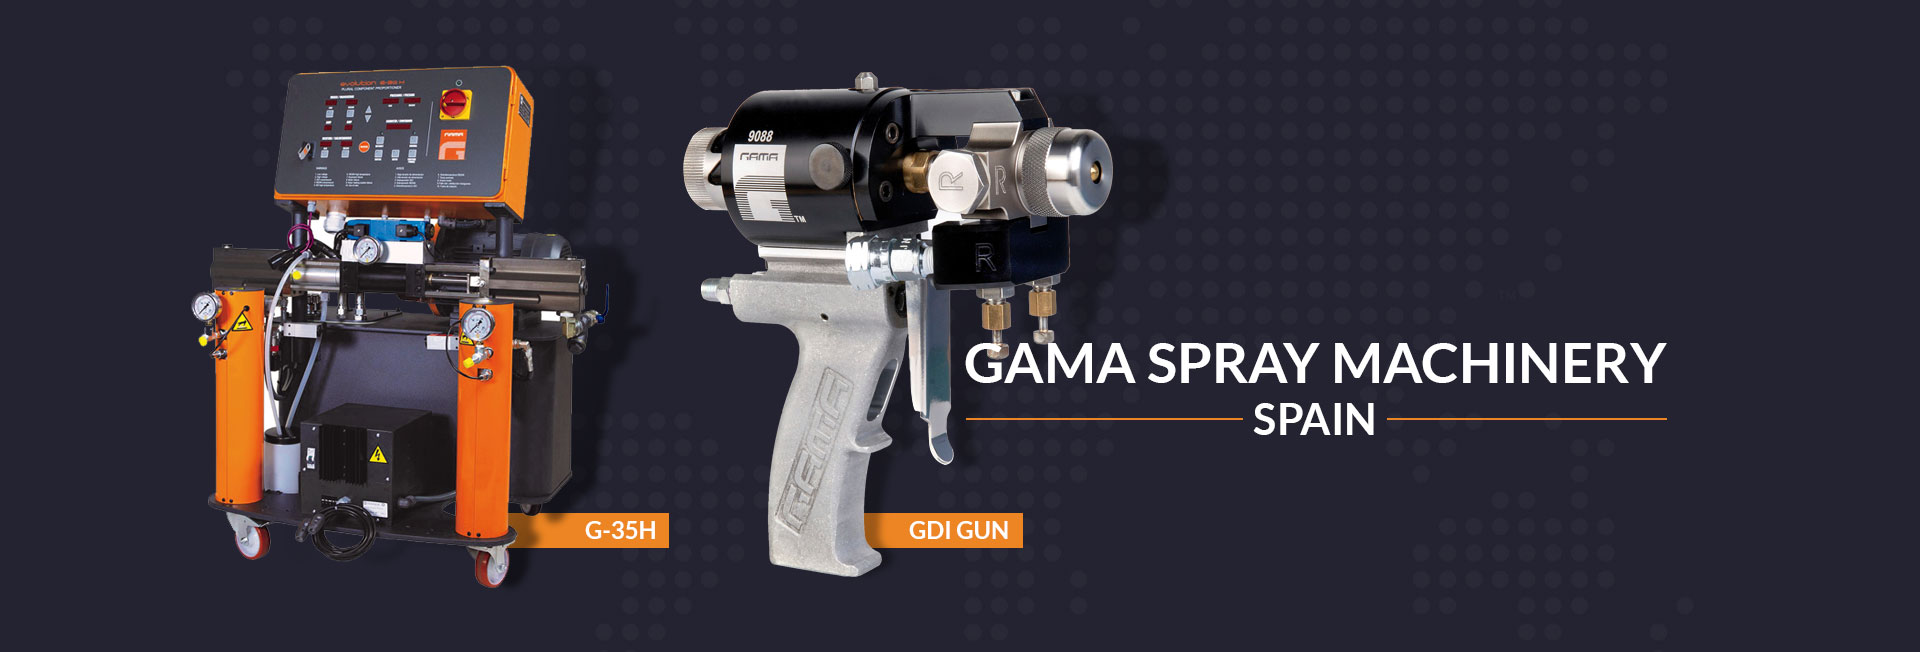 Gama Spray Machinery